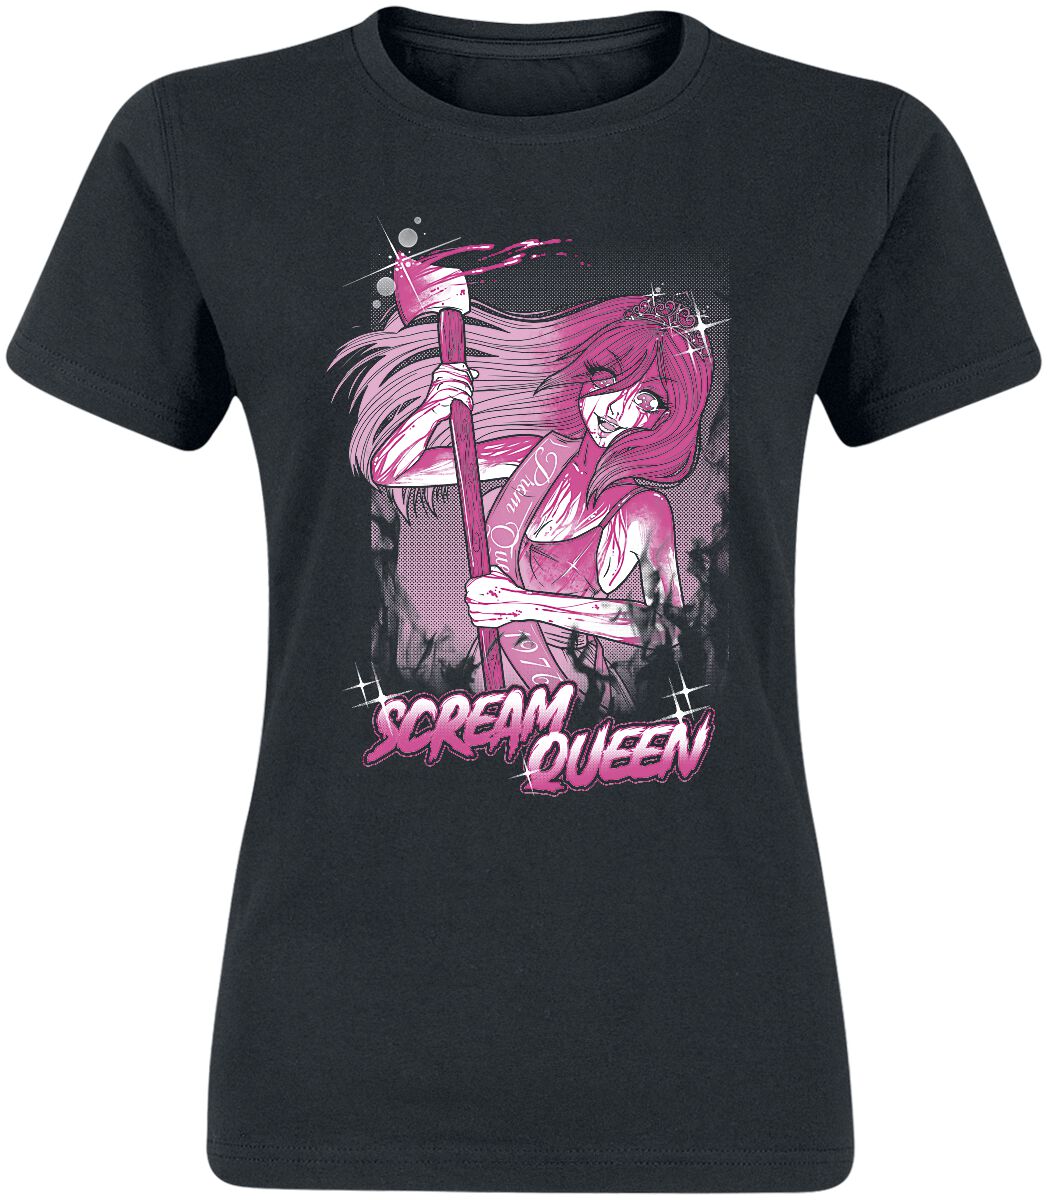 T-Shirt Manches courtes de Pinku Kult - Scream Queen - S à XXL - pour Femme - noir